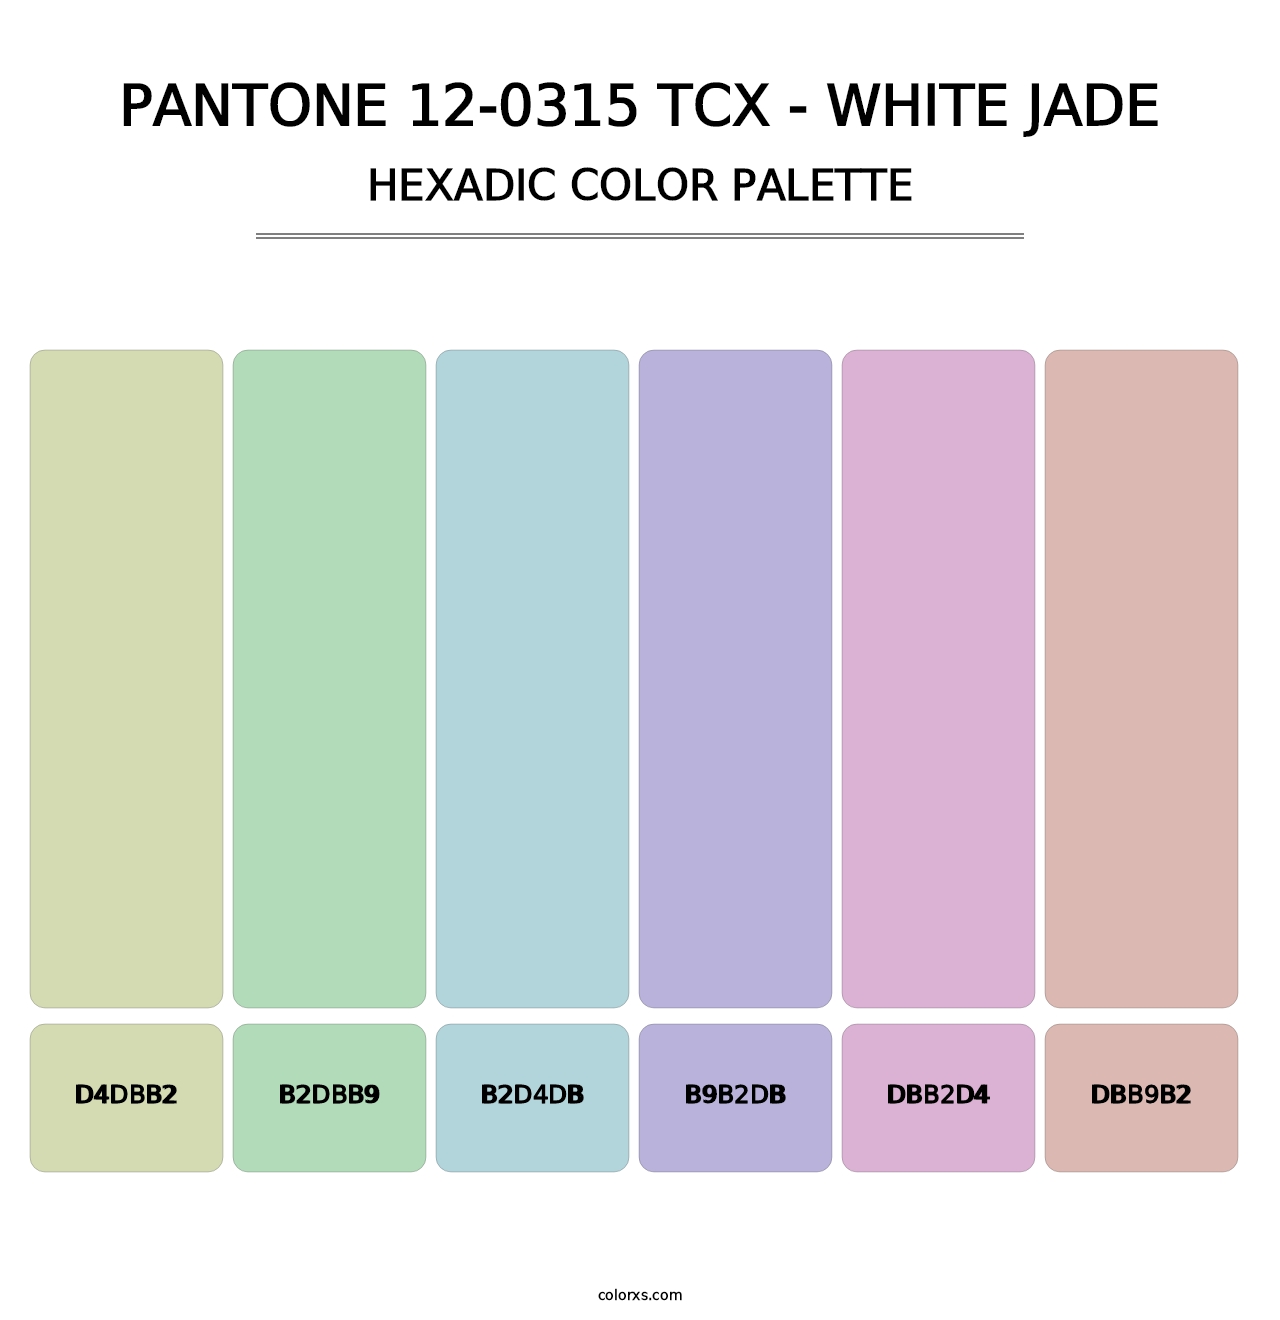 PANTONE 12-0315 TCX - White Jade - Hexadic Color Palette